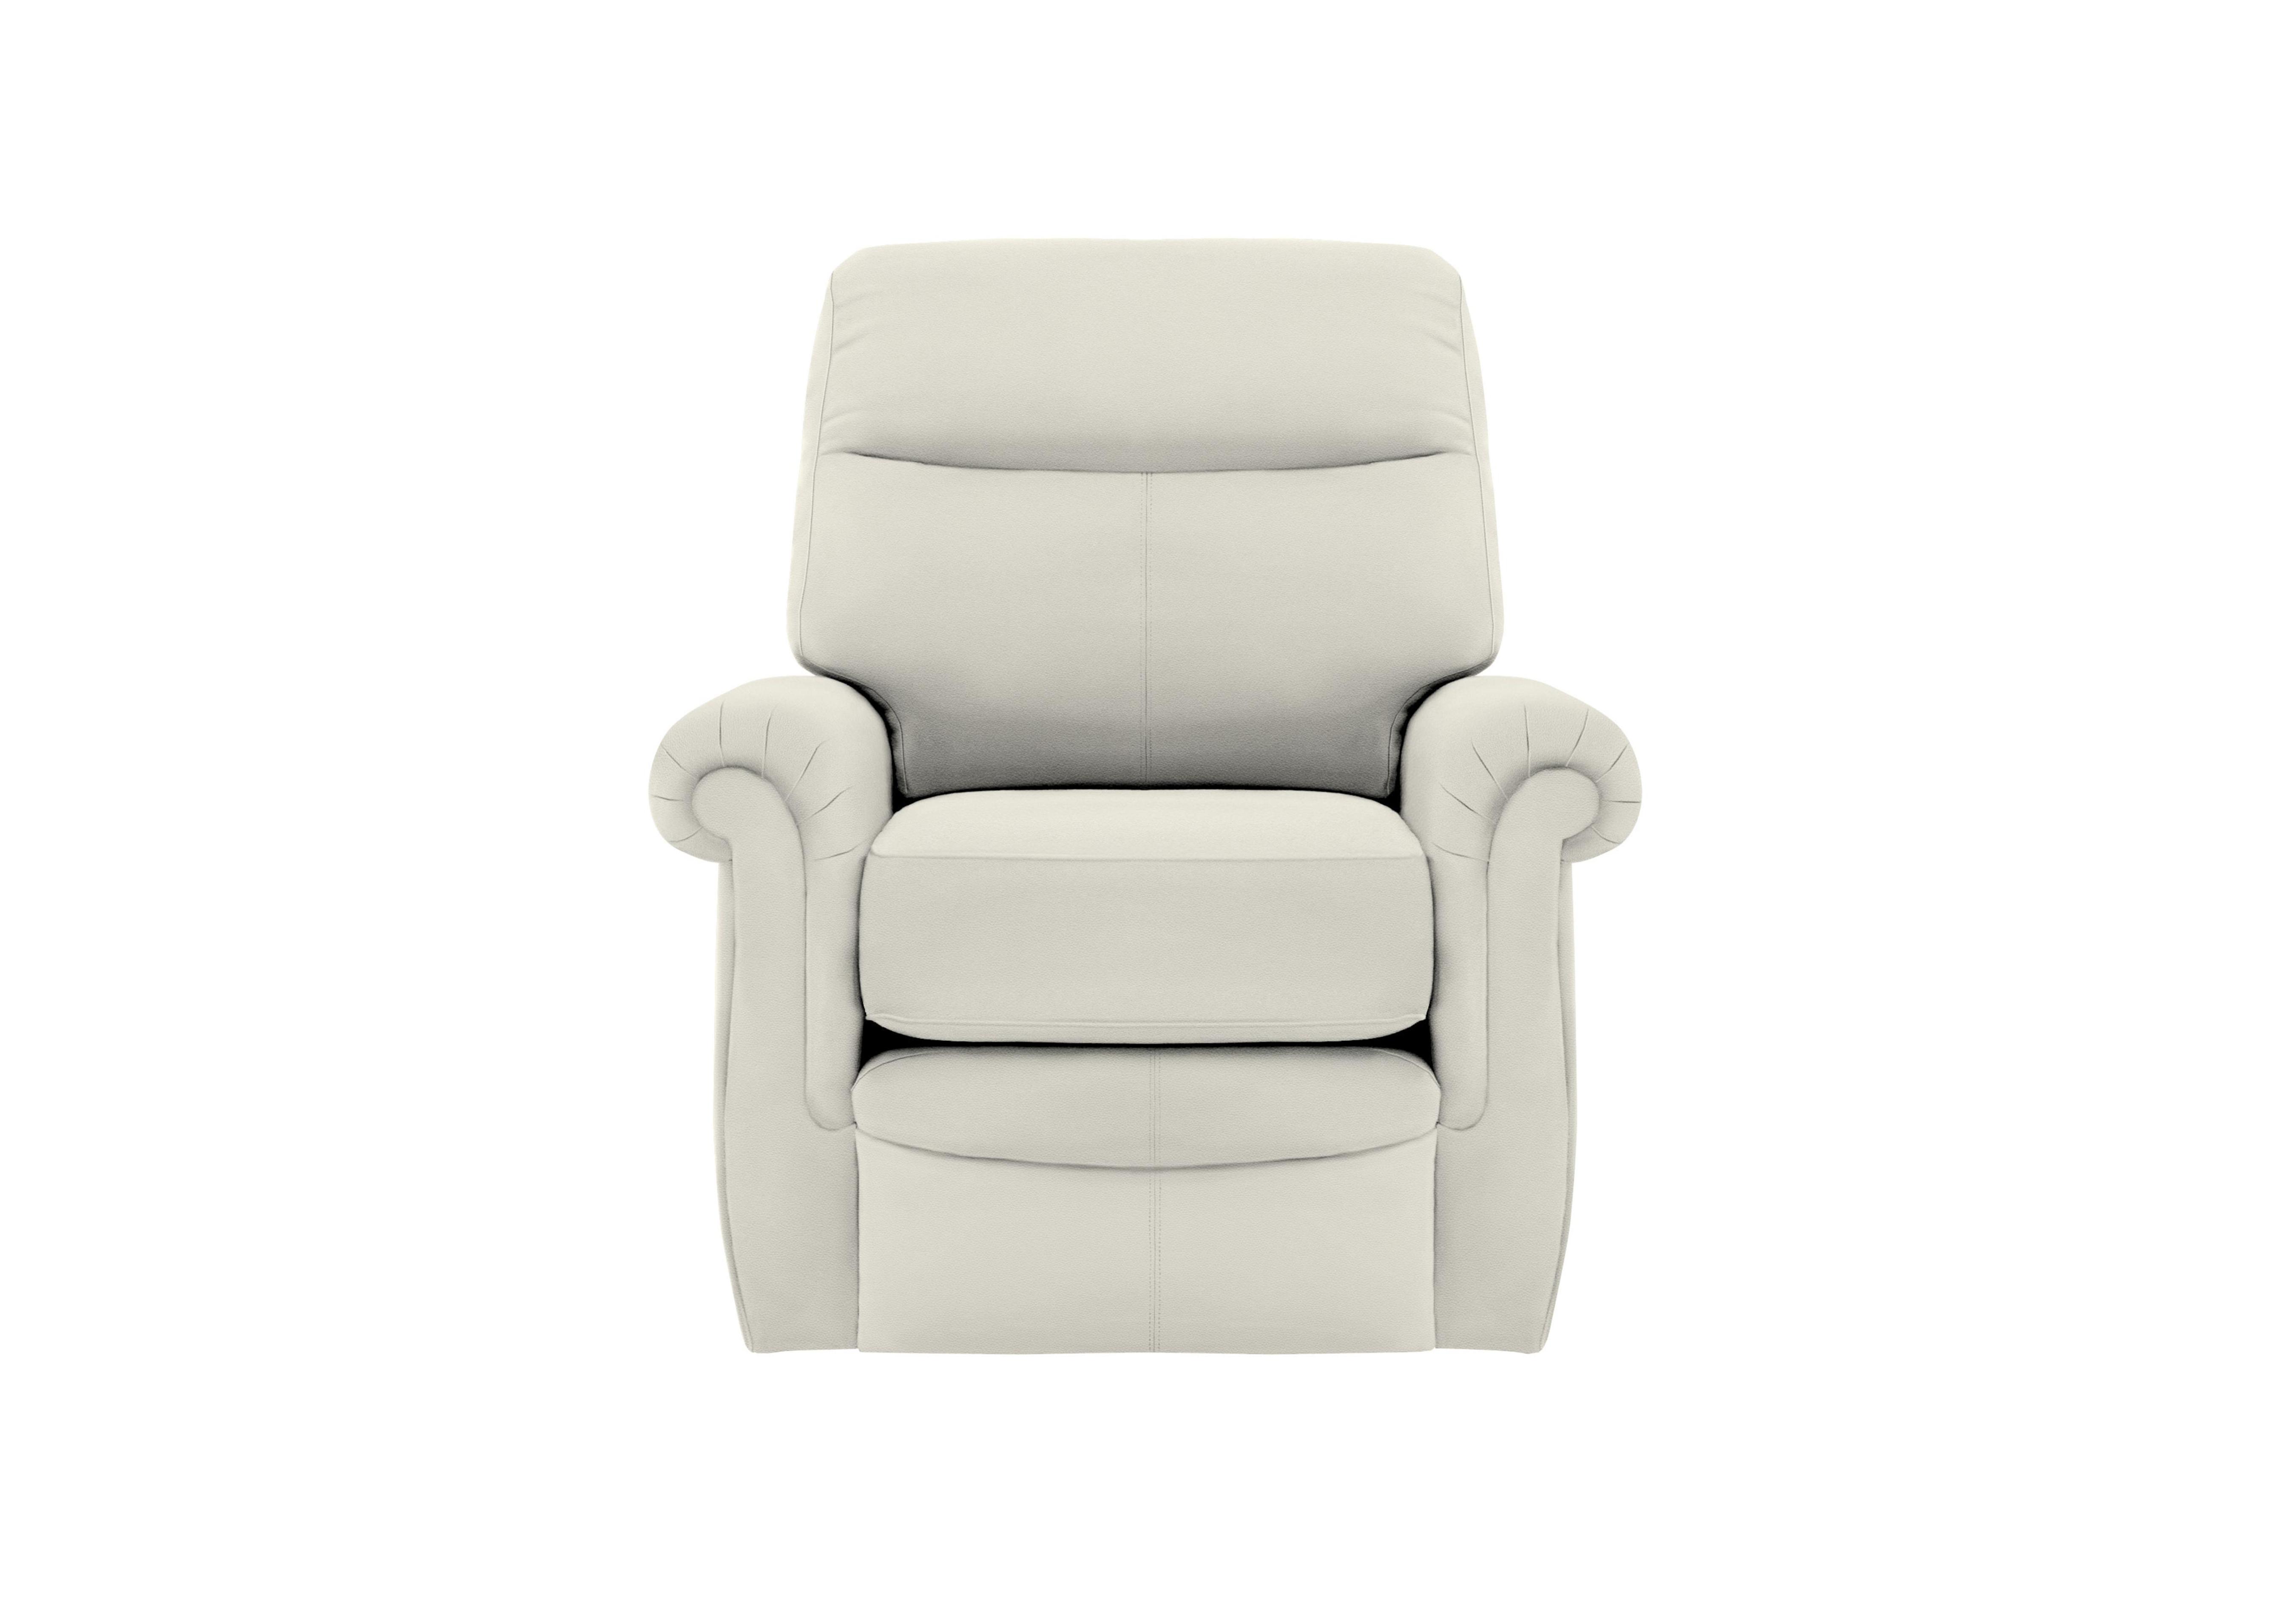 Avon Leather Recliner Armchair in H006 Oxford Light Grey on Furniture Village